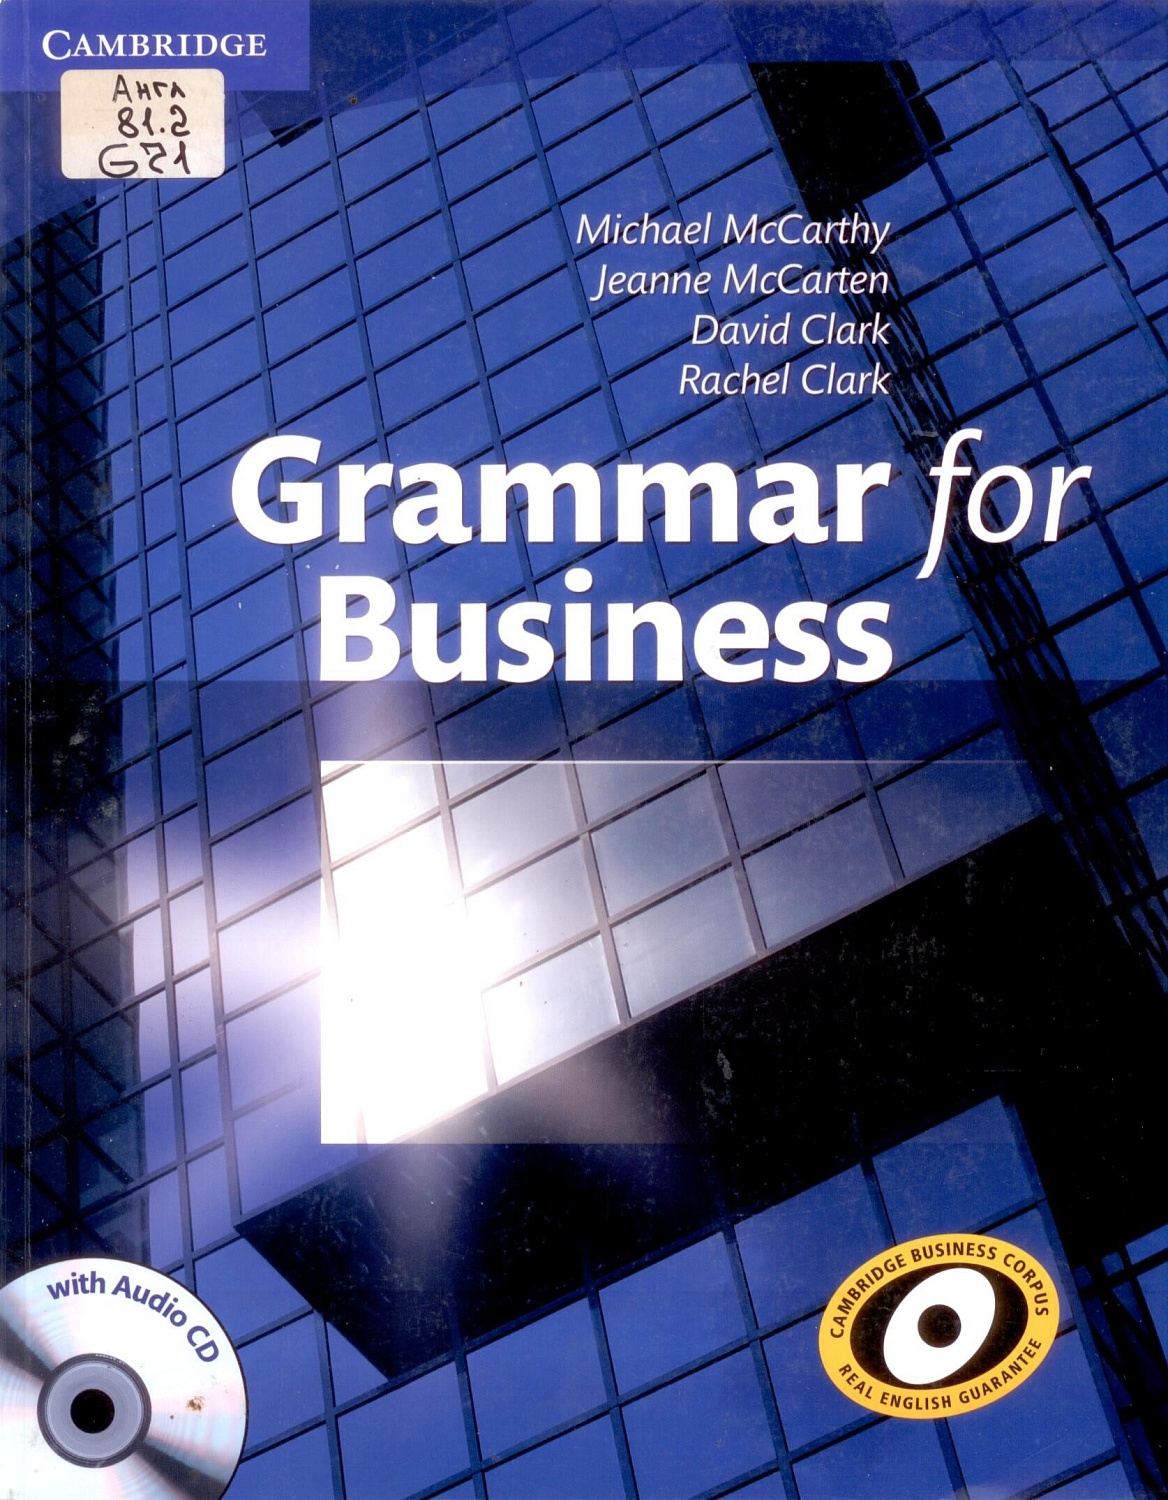 Англ 81.2 G 71 Grammar for Business:[student’s book] / Michael McCarthy [et al.] – Cambridge: Cambridge University Press, 2009. – 272 p.: ill. + 1 Audio CD.